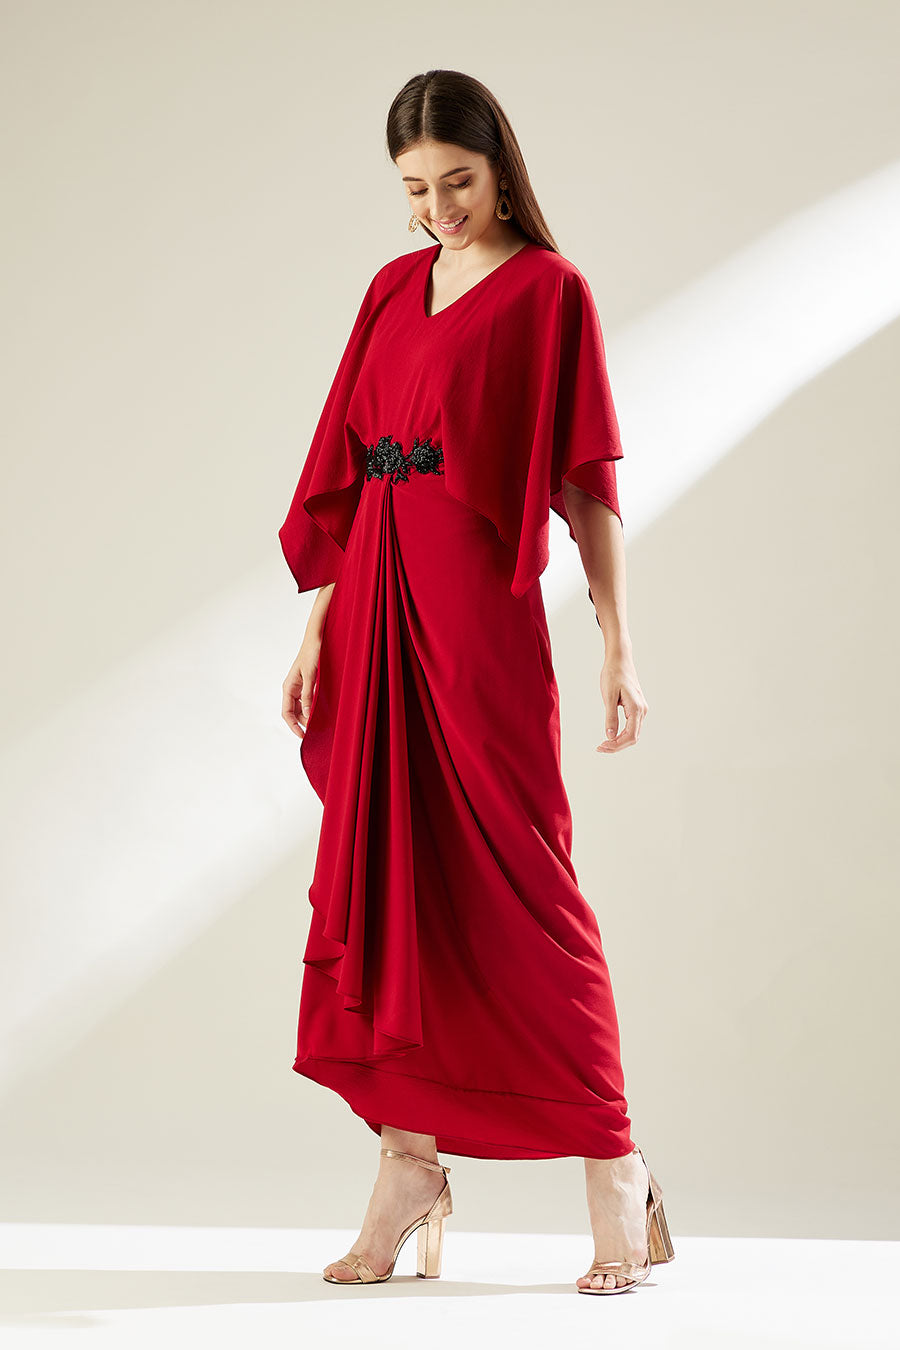 Crimson Red Embroidered Drape Dress